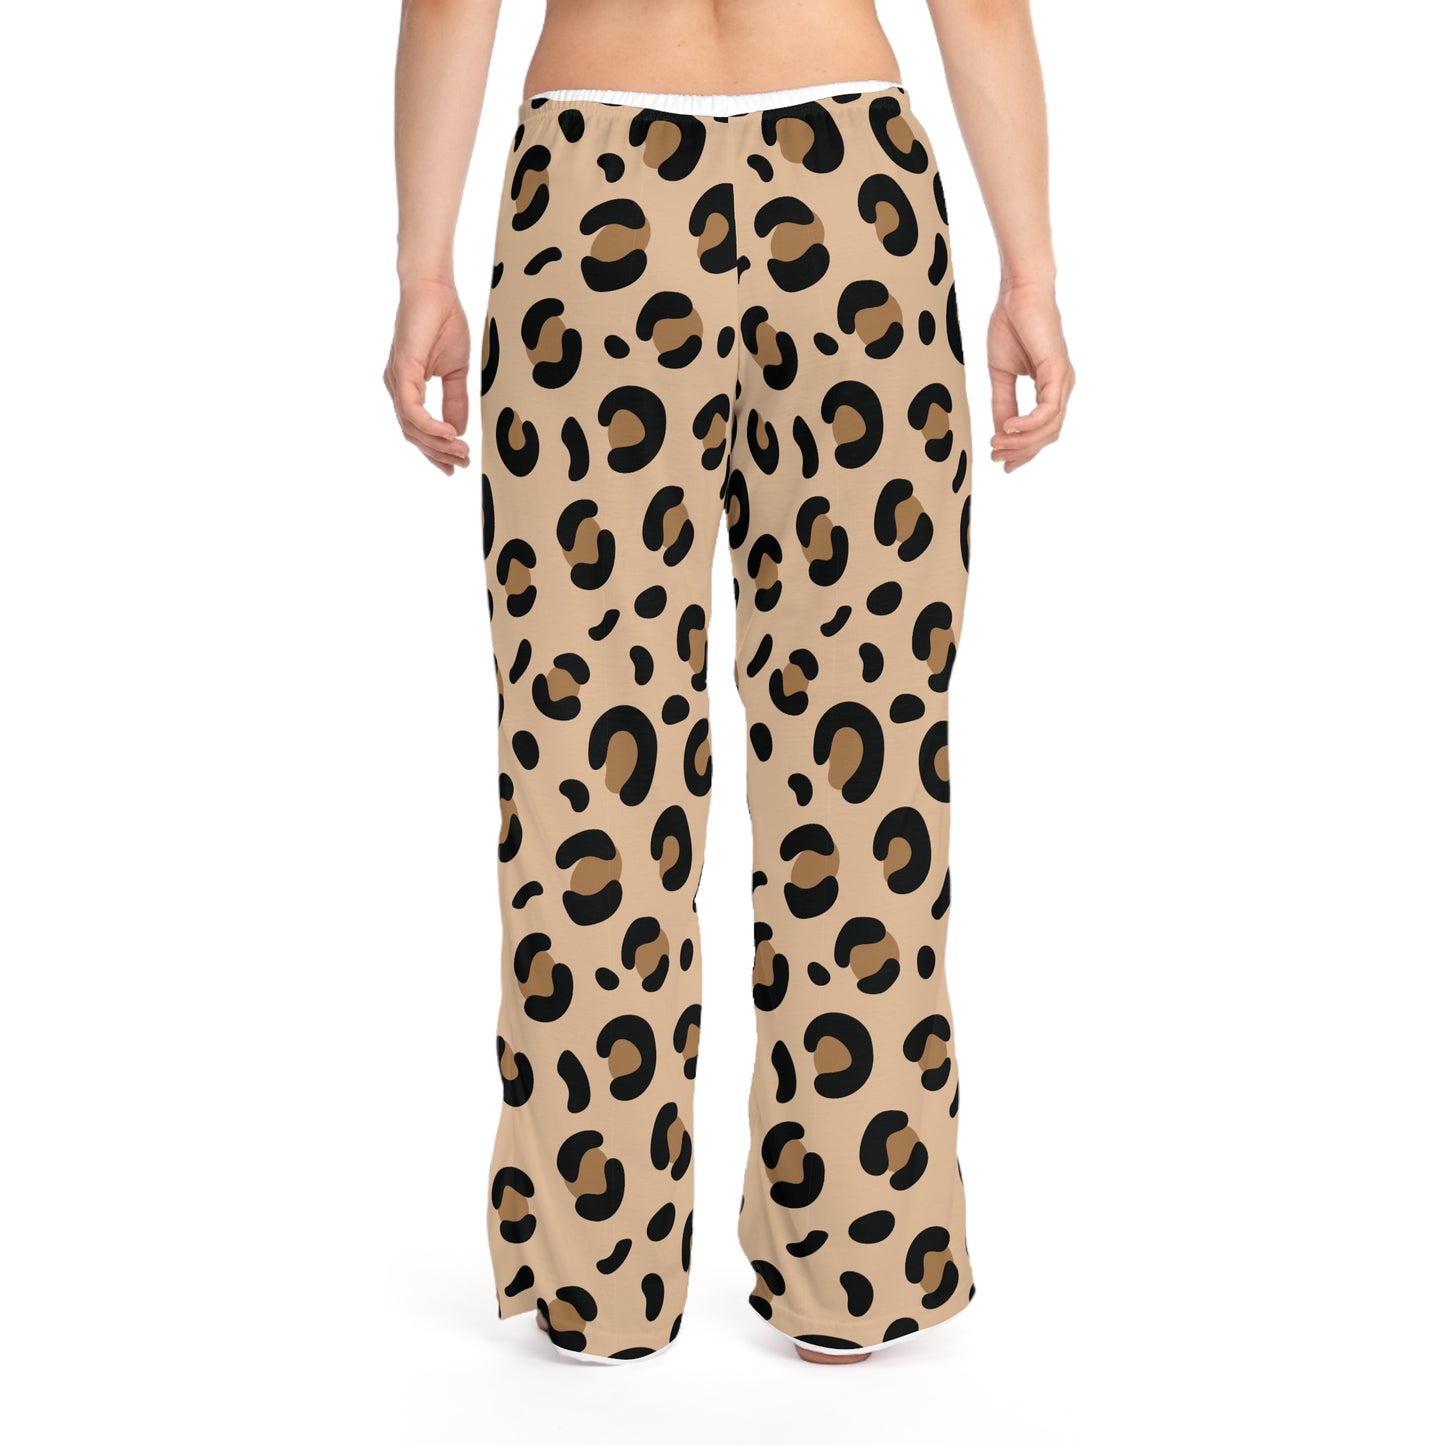 Cheetah Bottoms Women's Pajama Pants